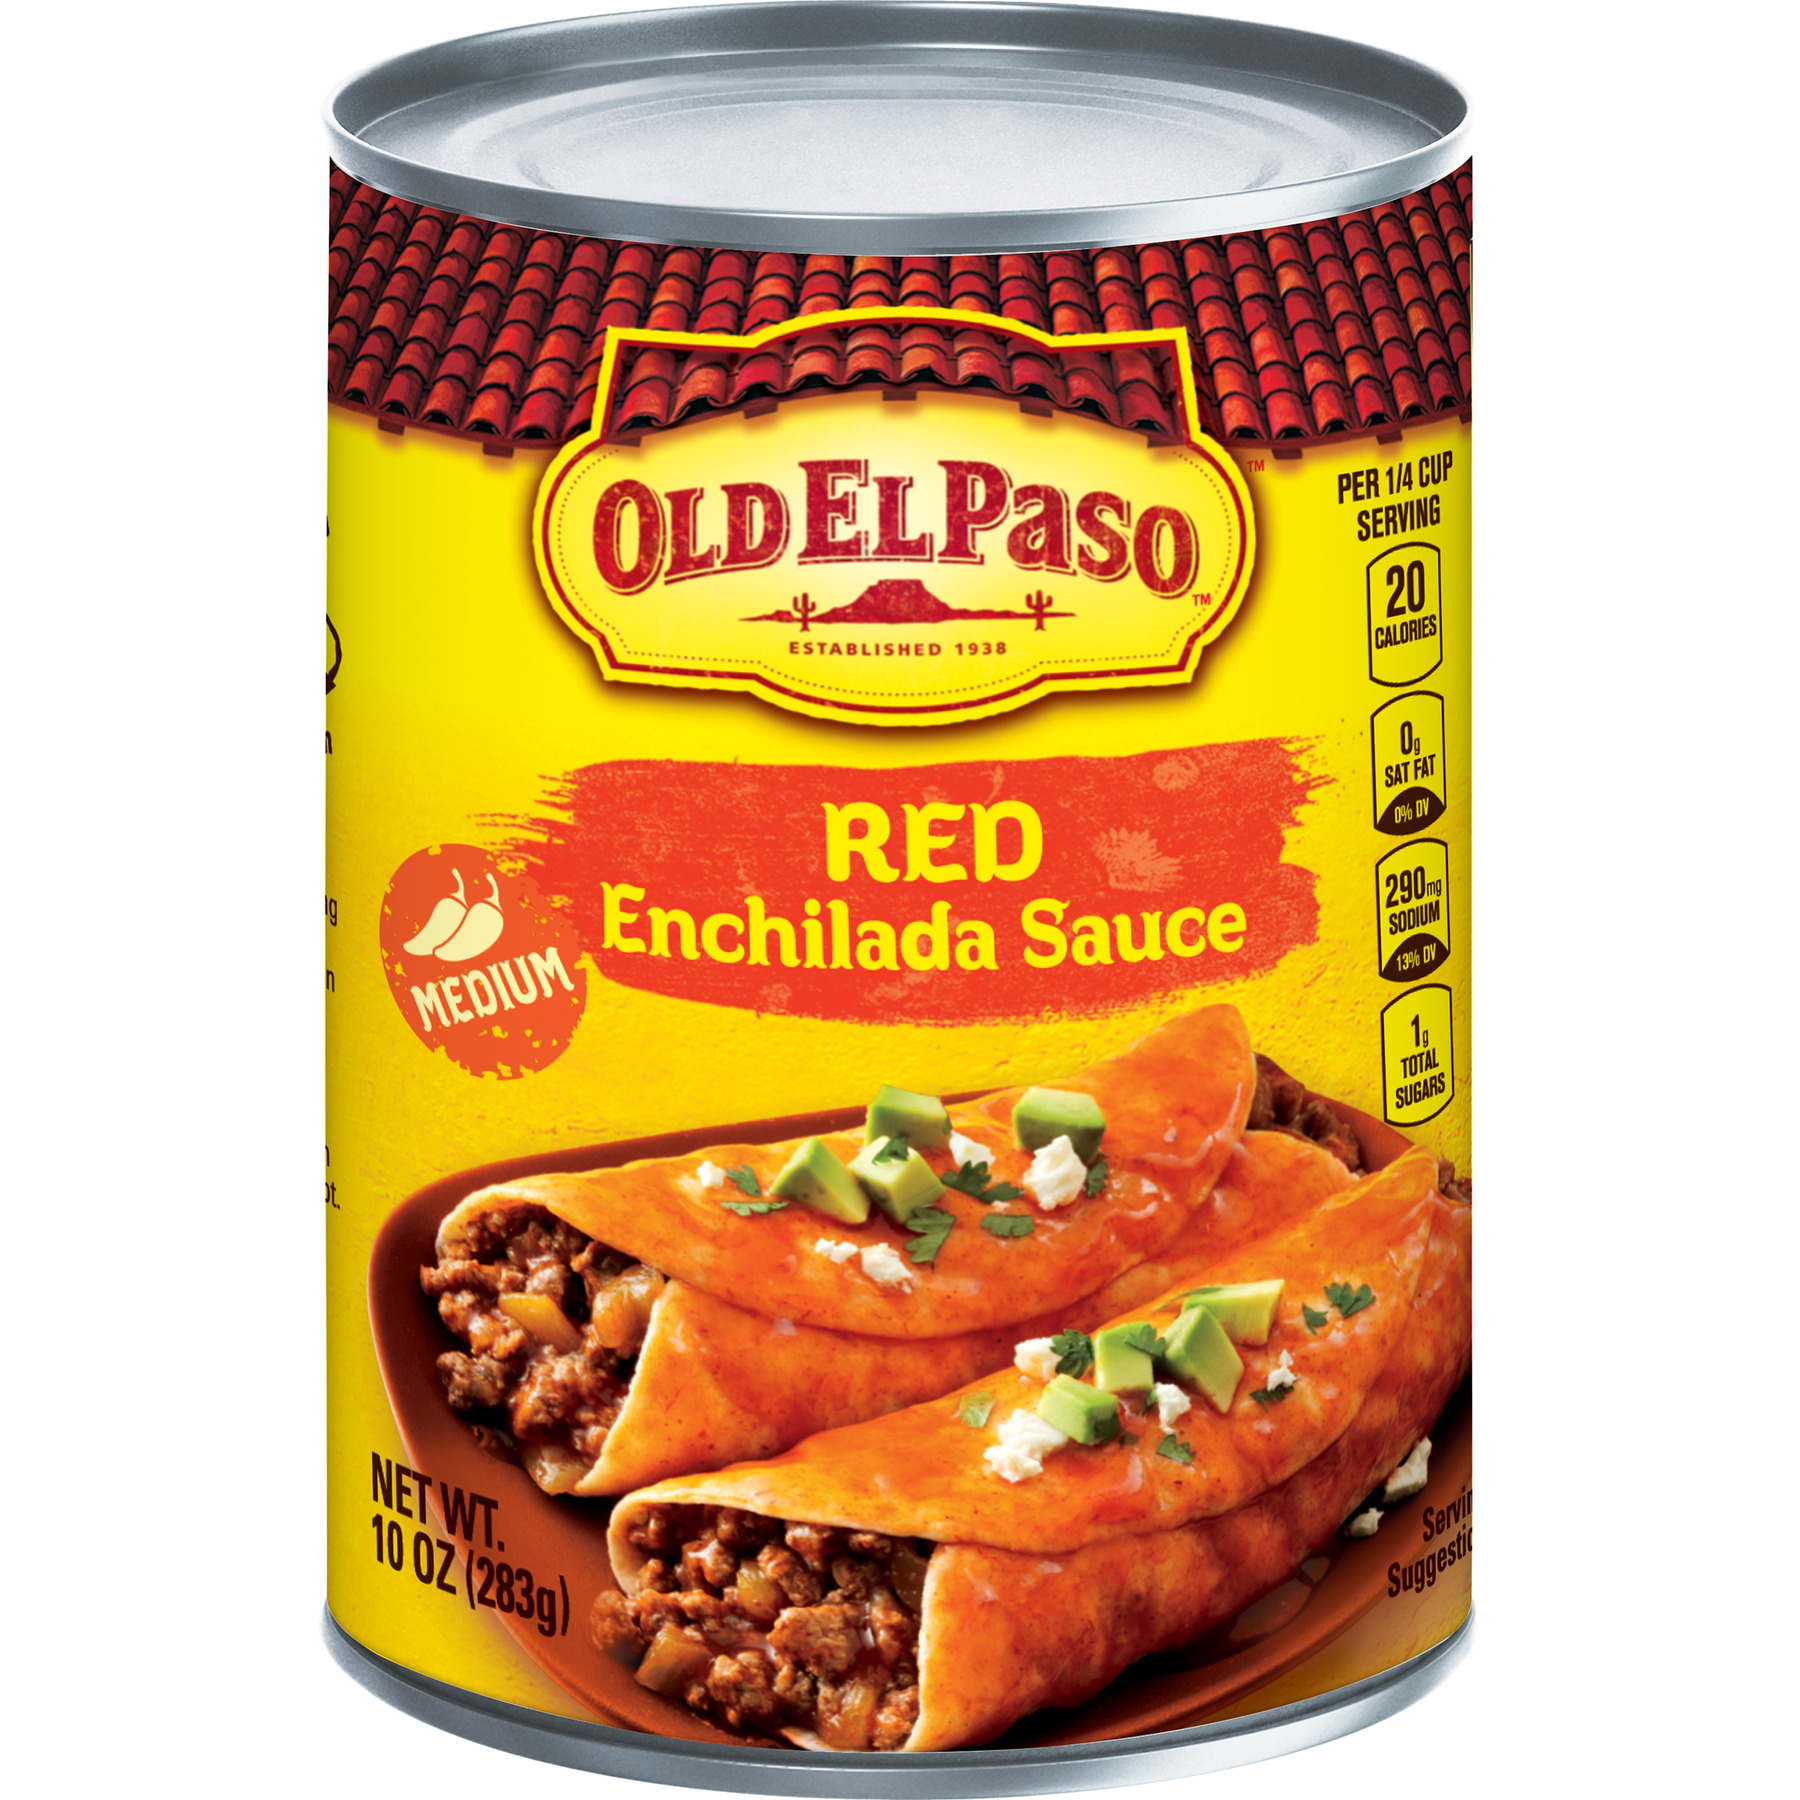 Old El Paso Medium Enchilada Sauce, 10 oz Can